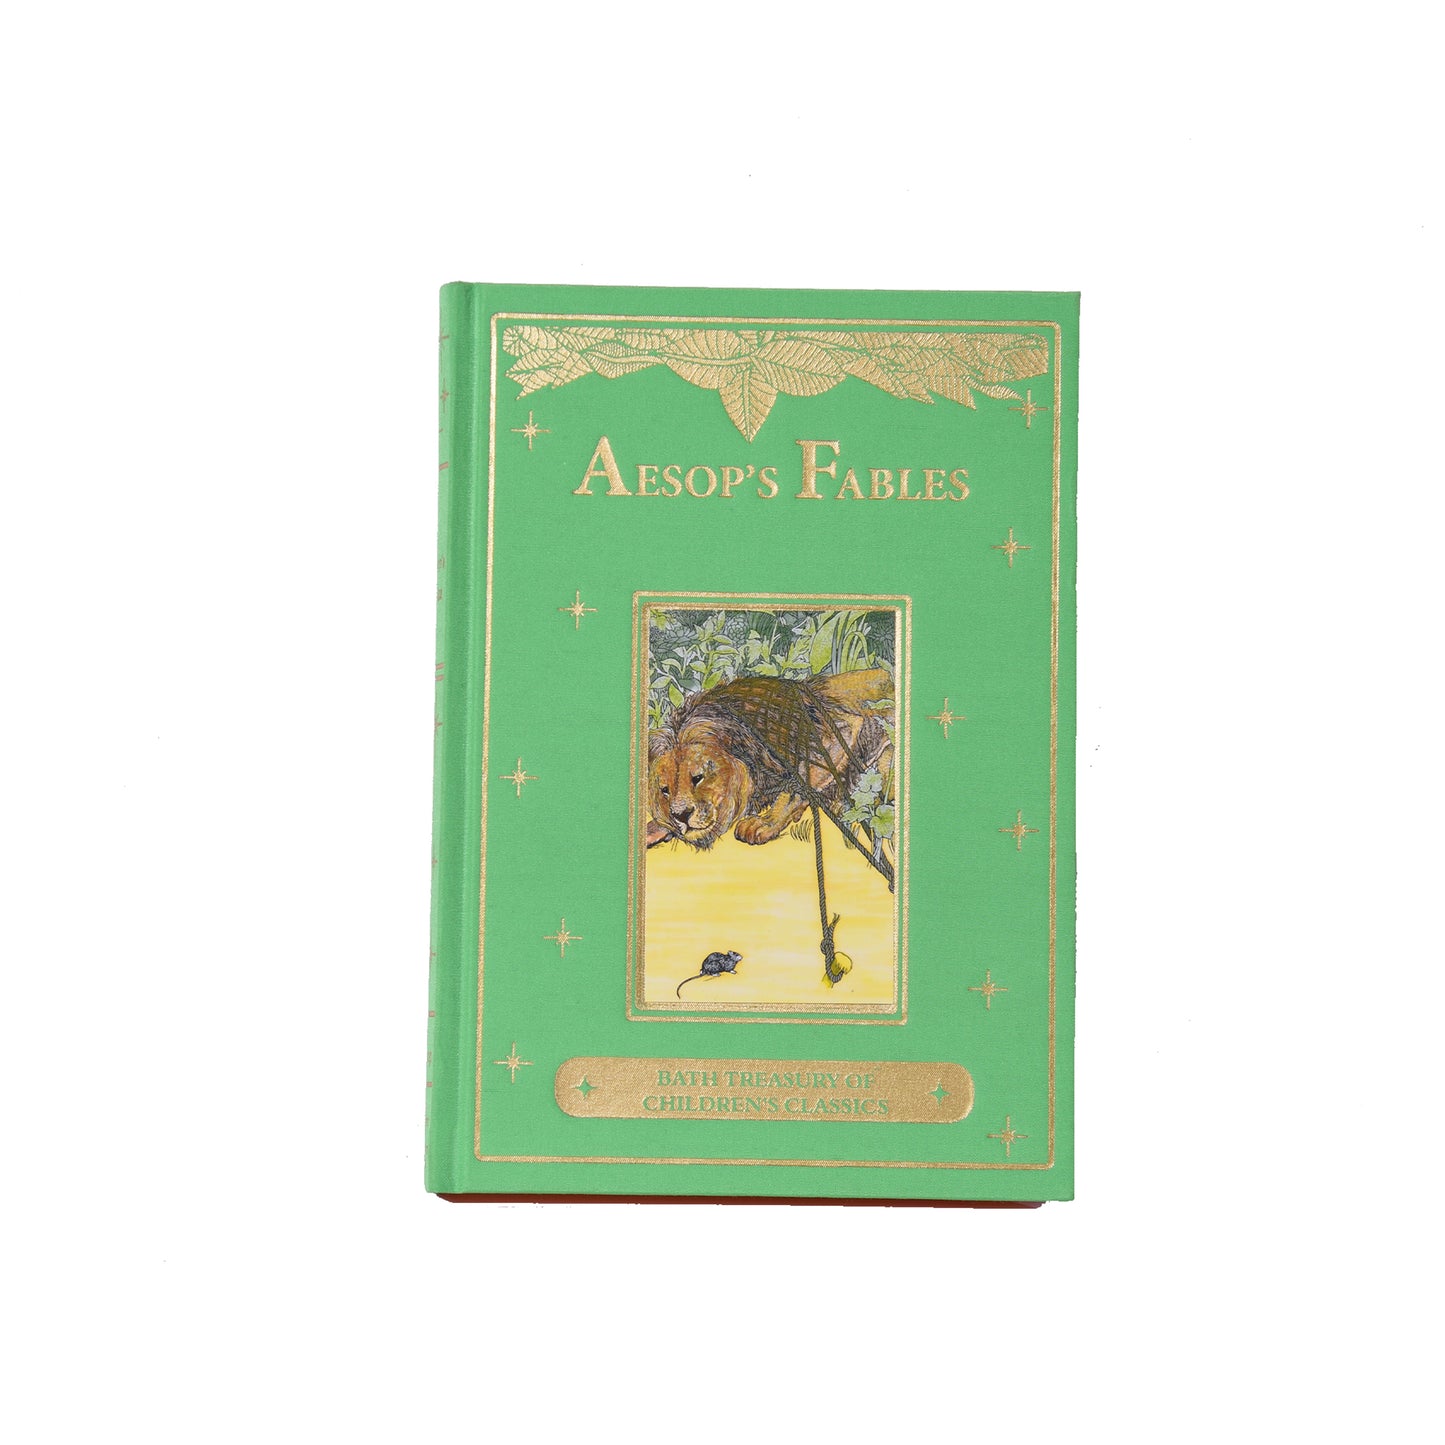 Aesop's Fables: Bath Treasury of Children's Classics